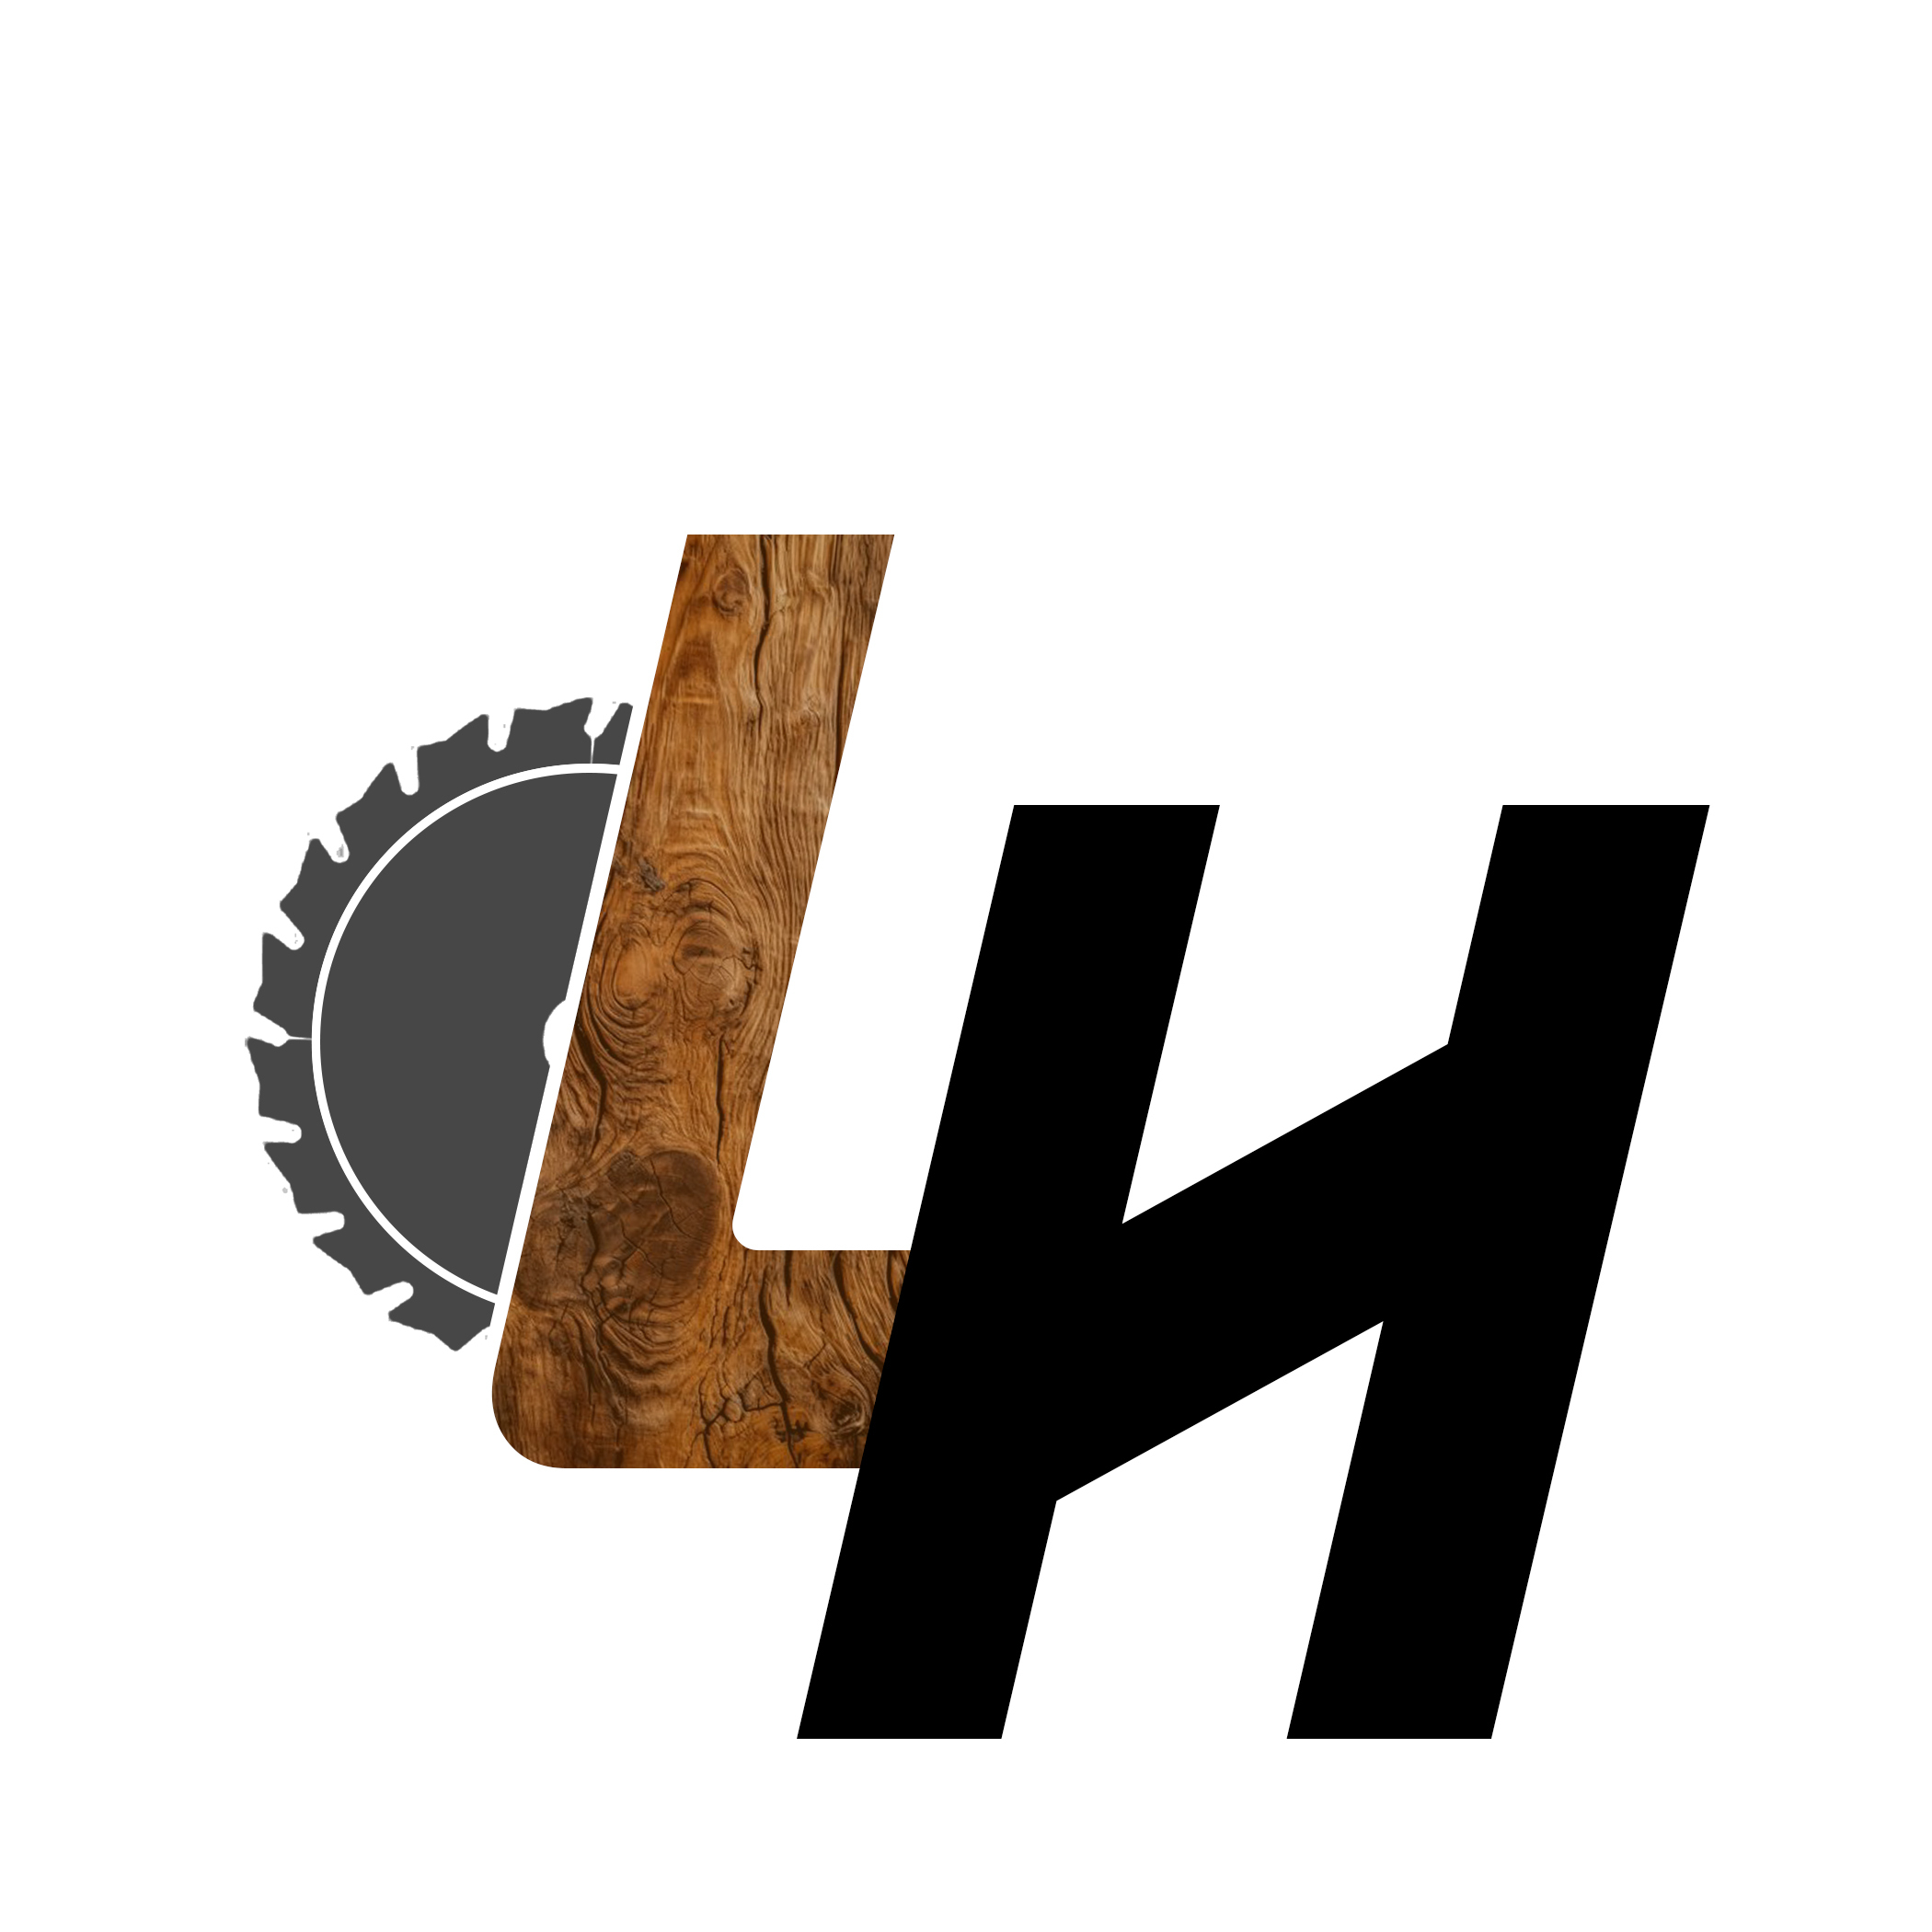 Lairds harvest's logo